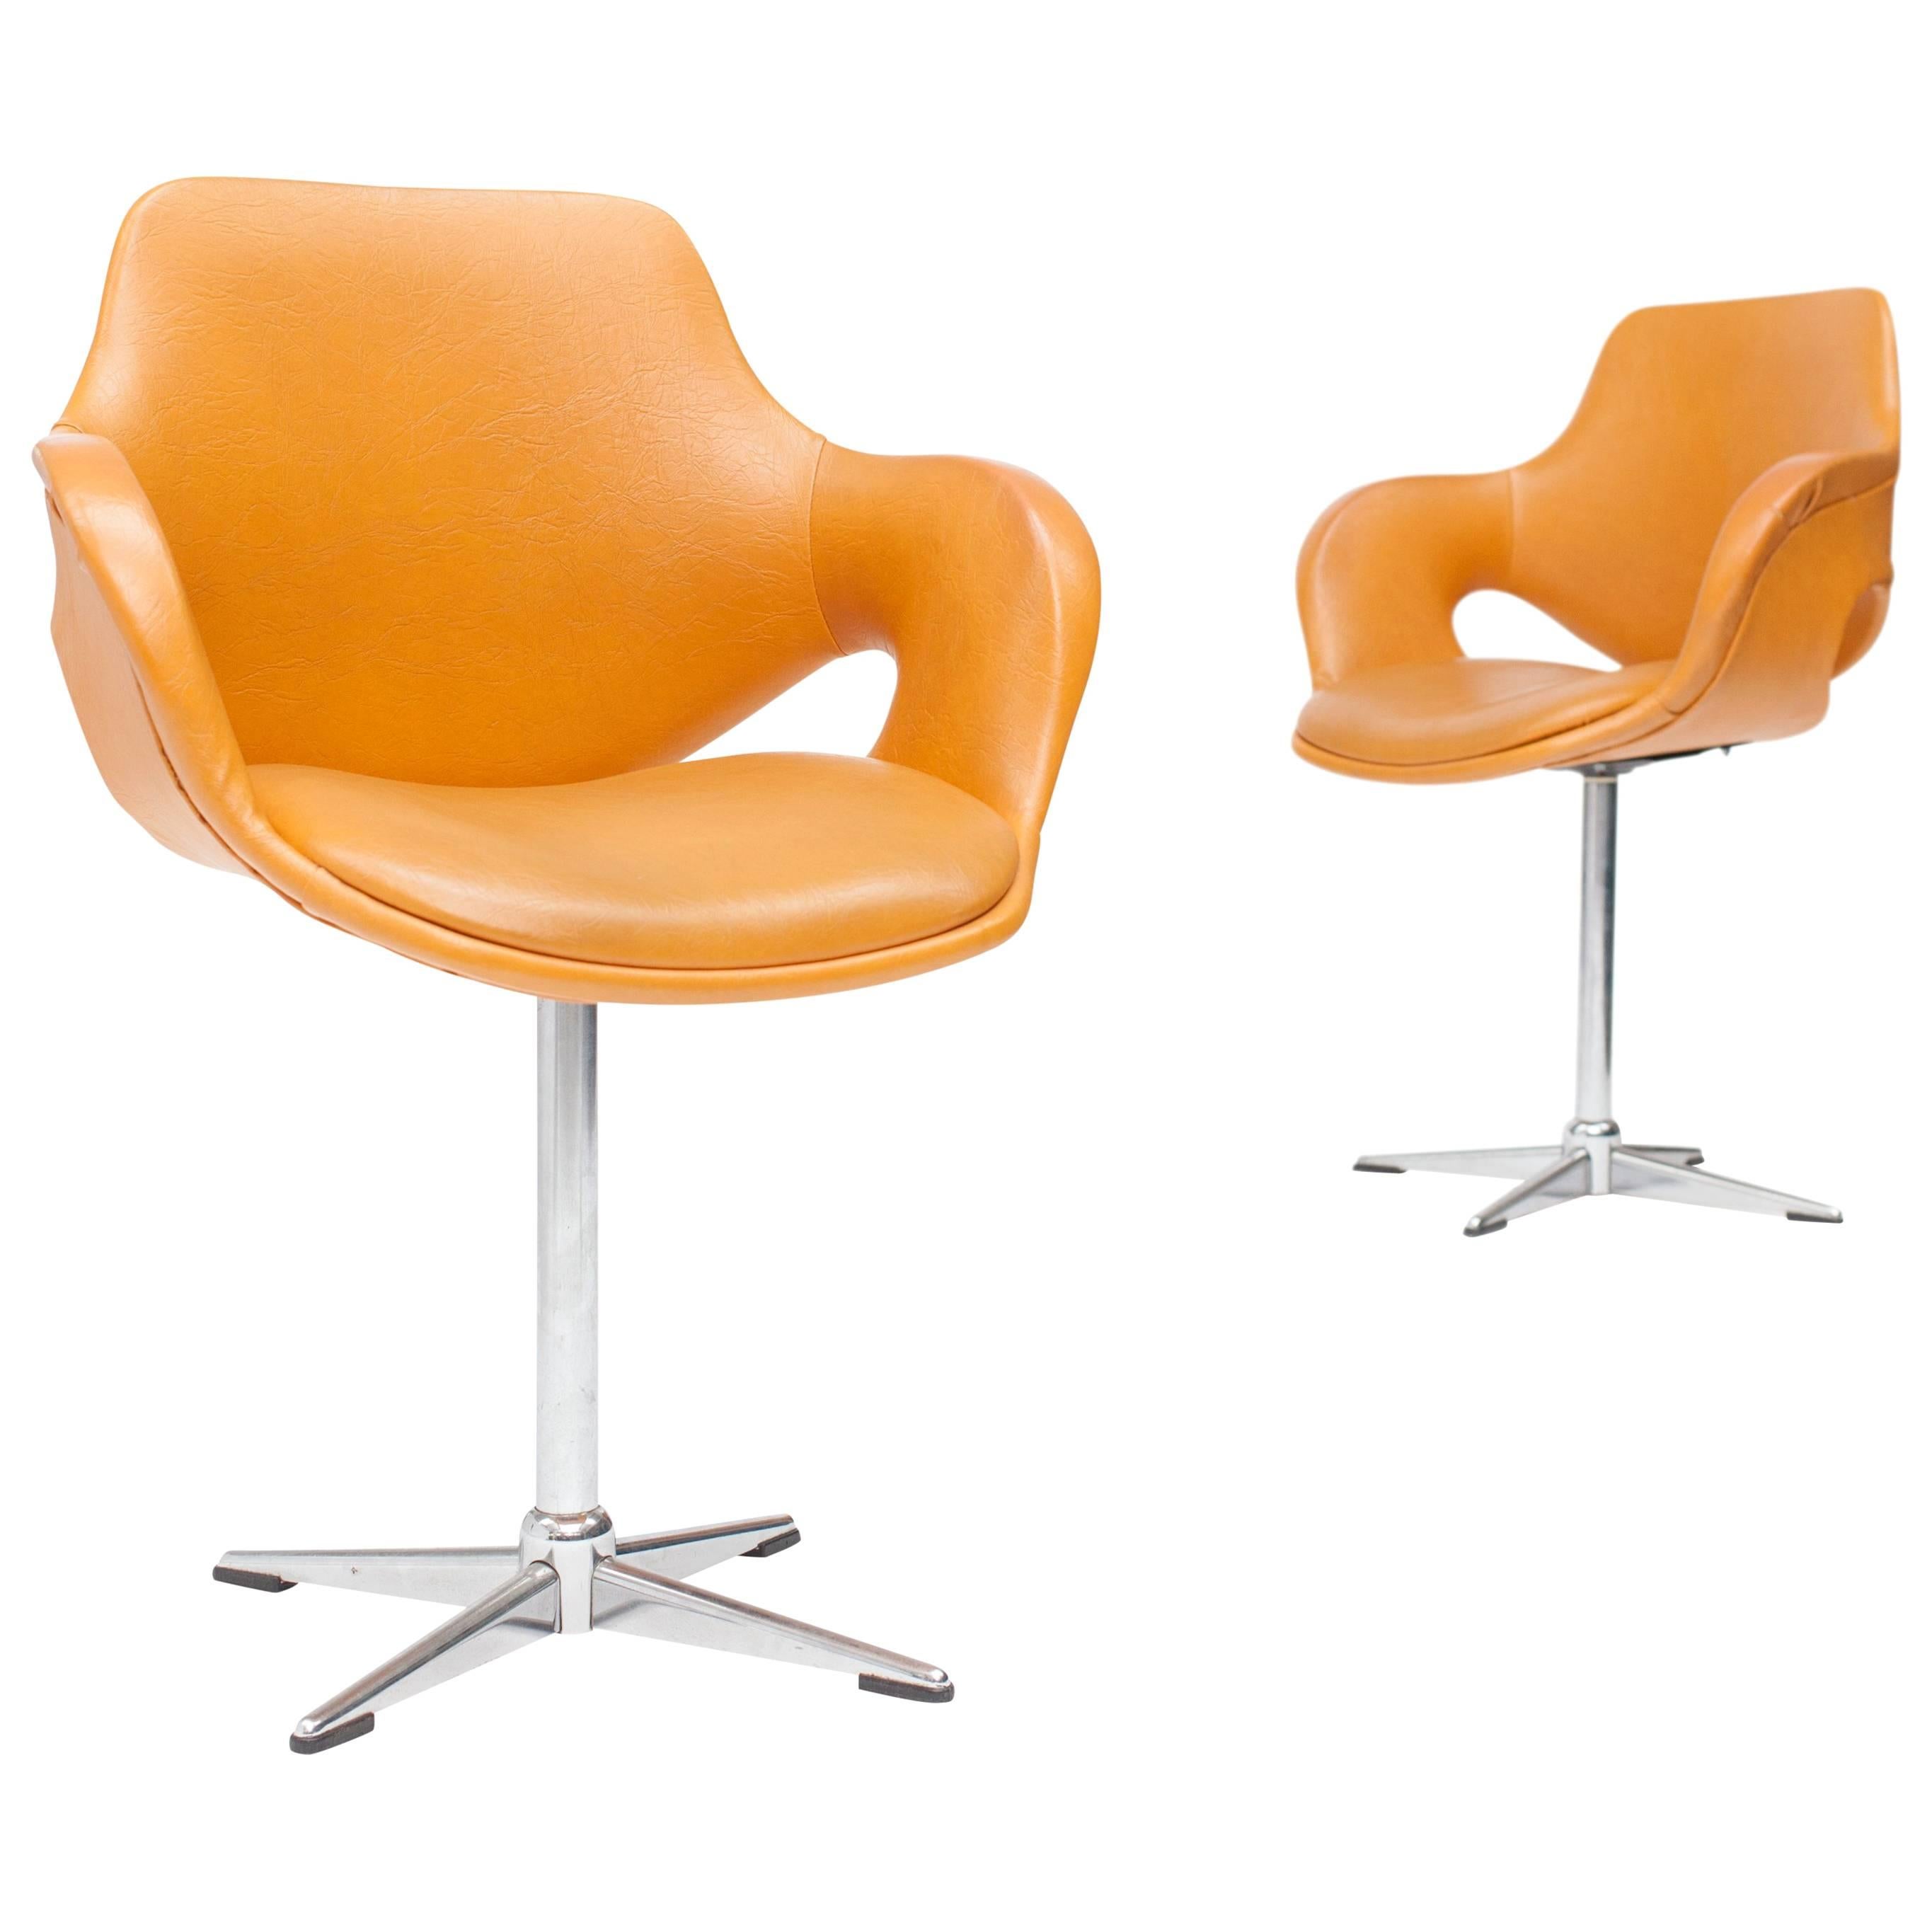 Boris Tabacoff style Mid-Century modern Swivel Chairs